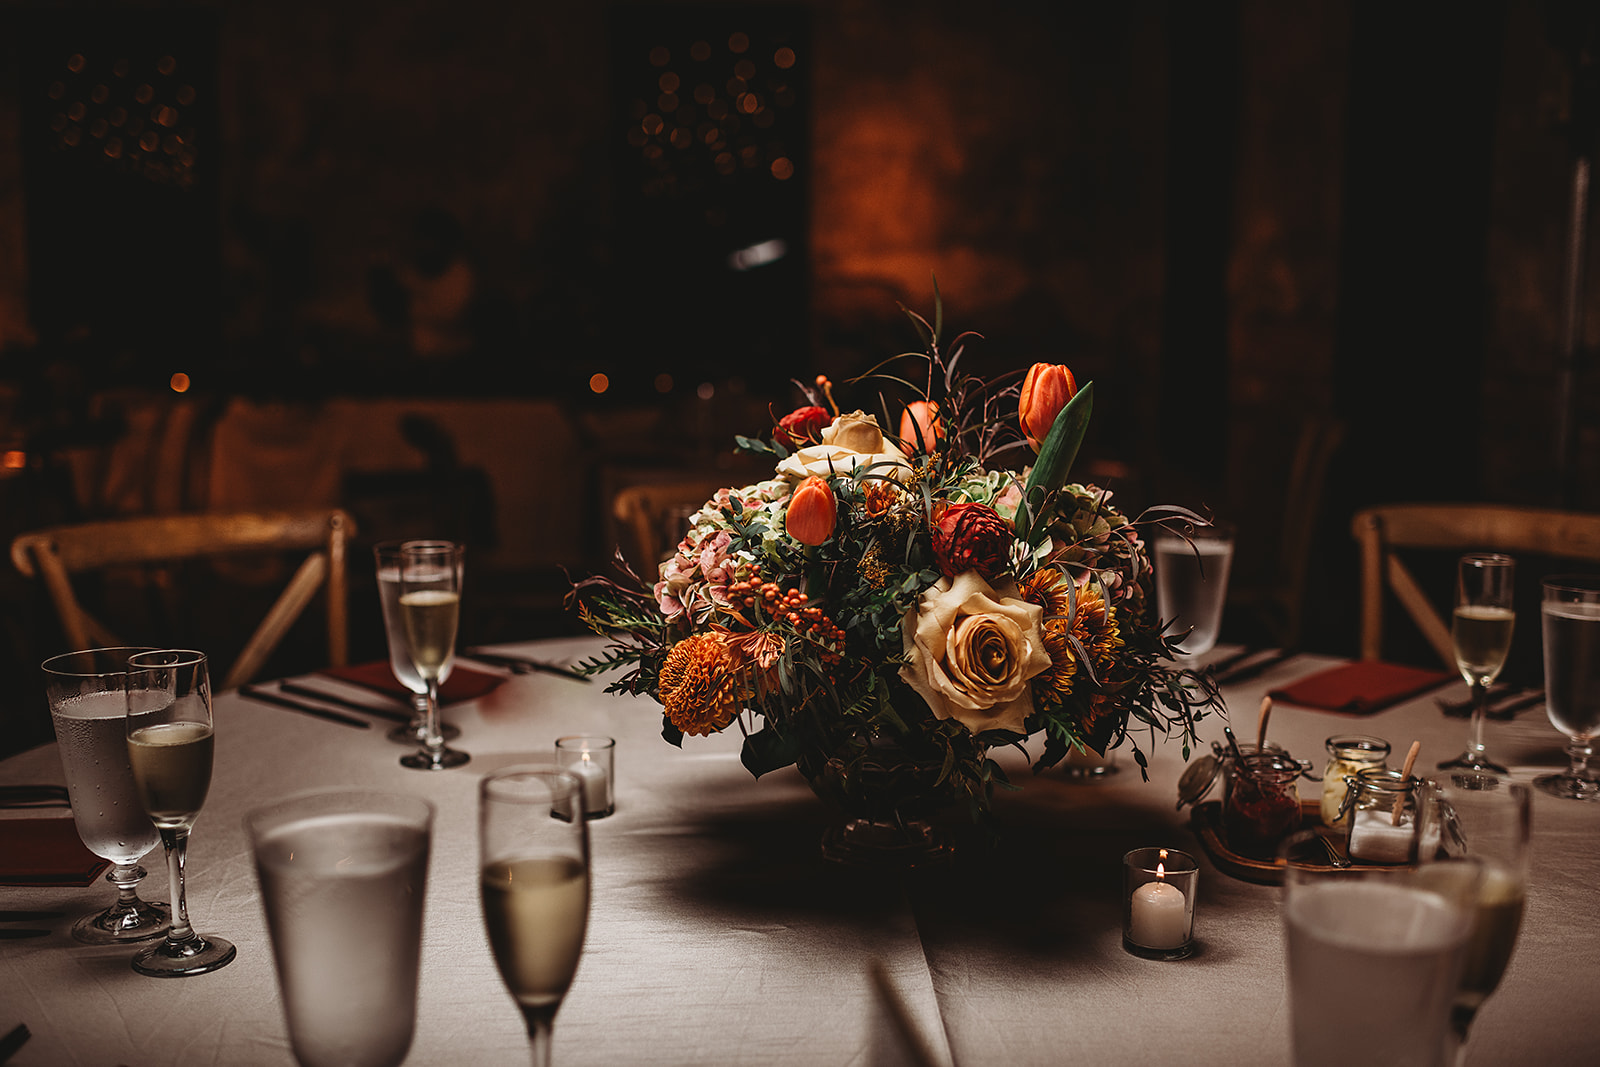 Baltimore wedding photographer captures table centerpieces and table decor